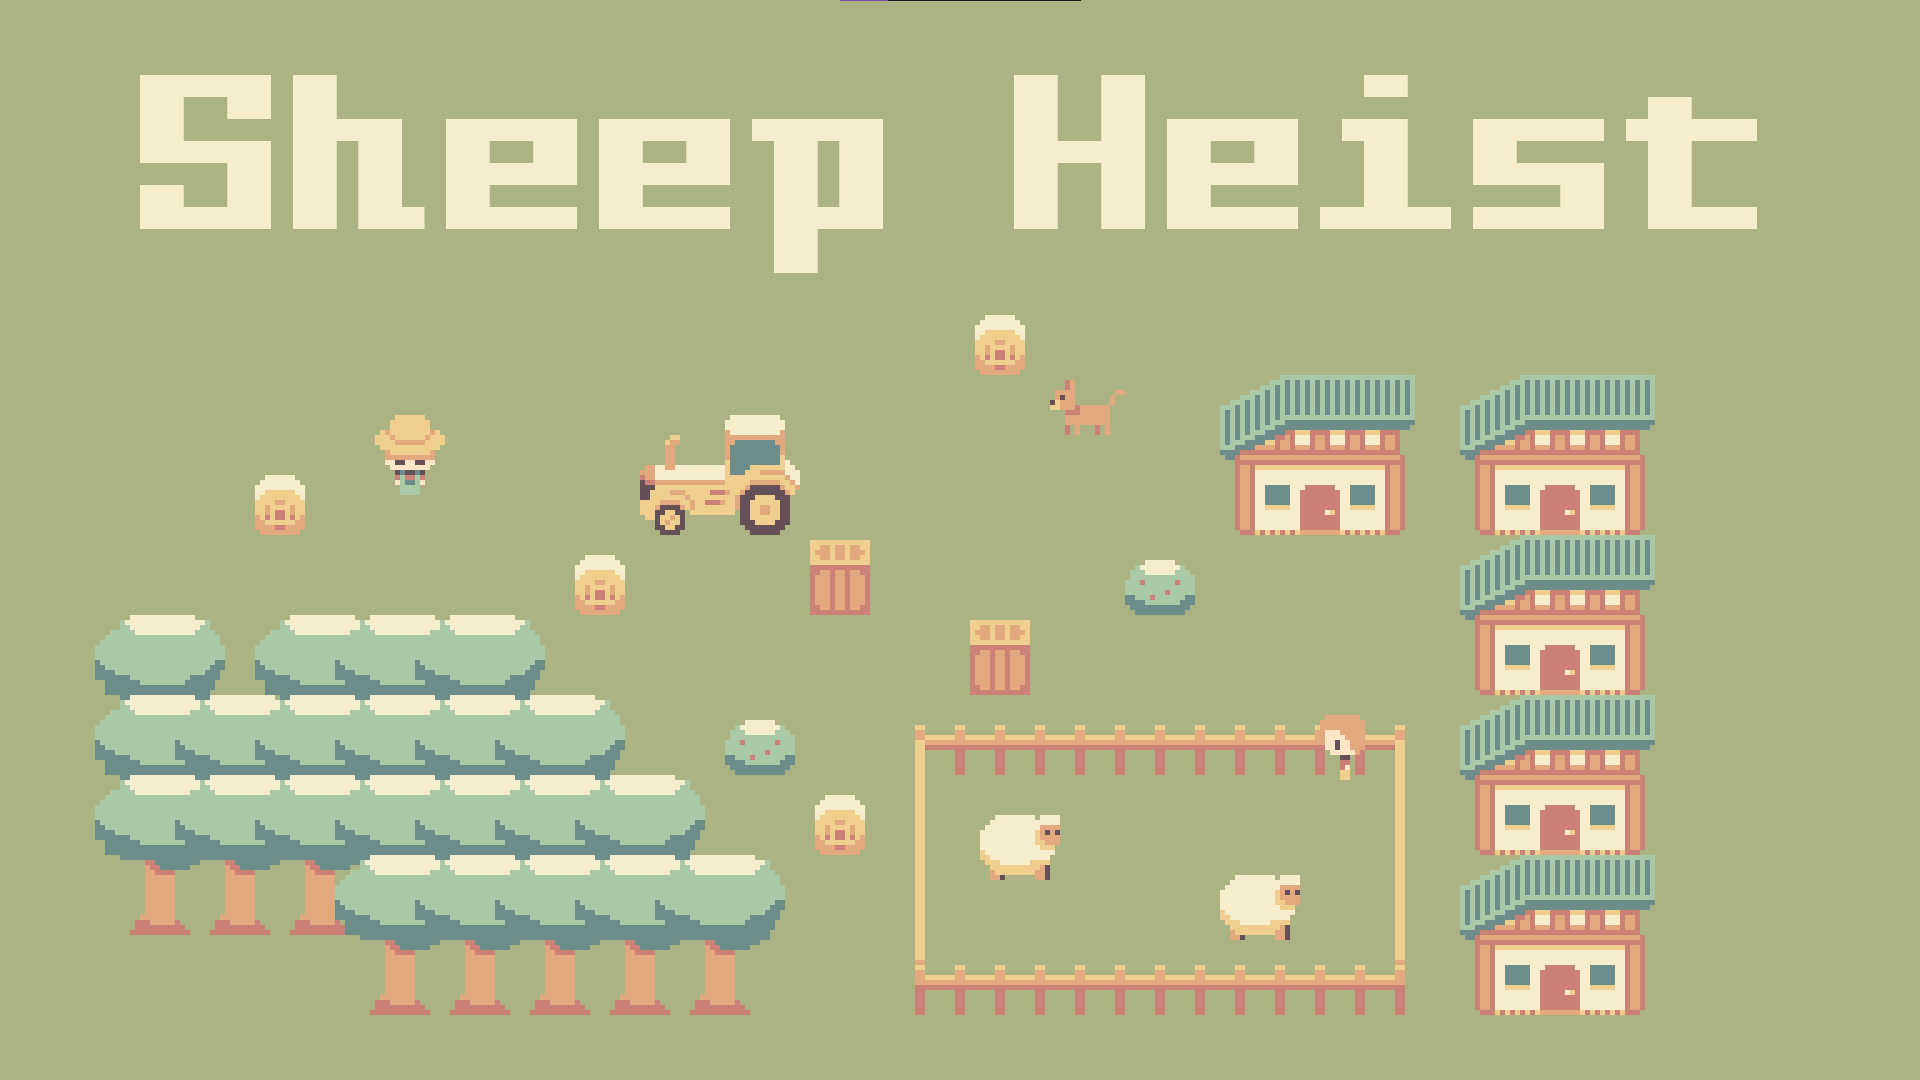 Sheep Heist